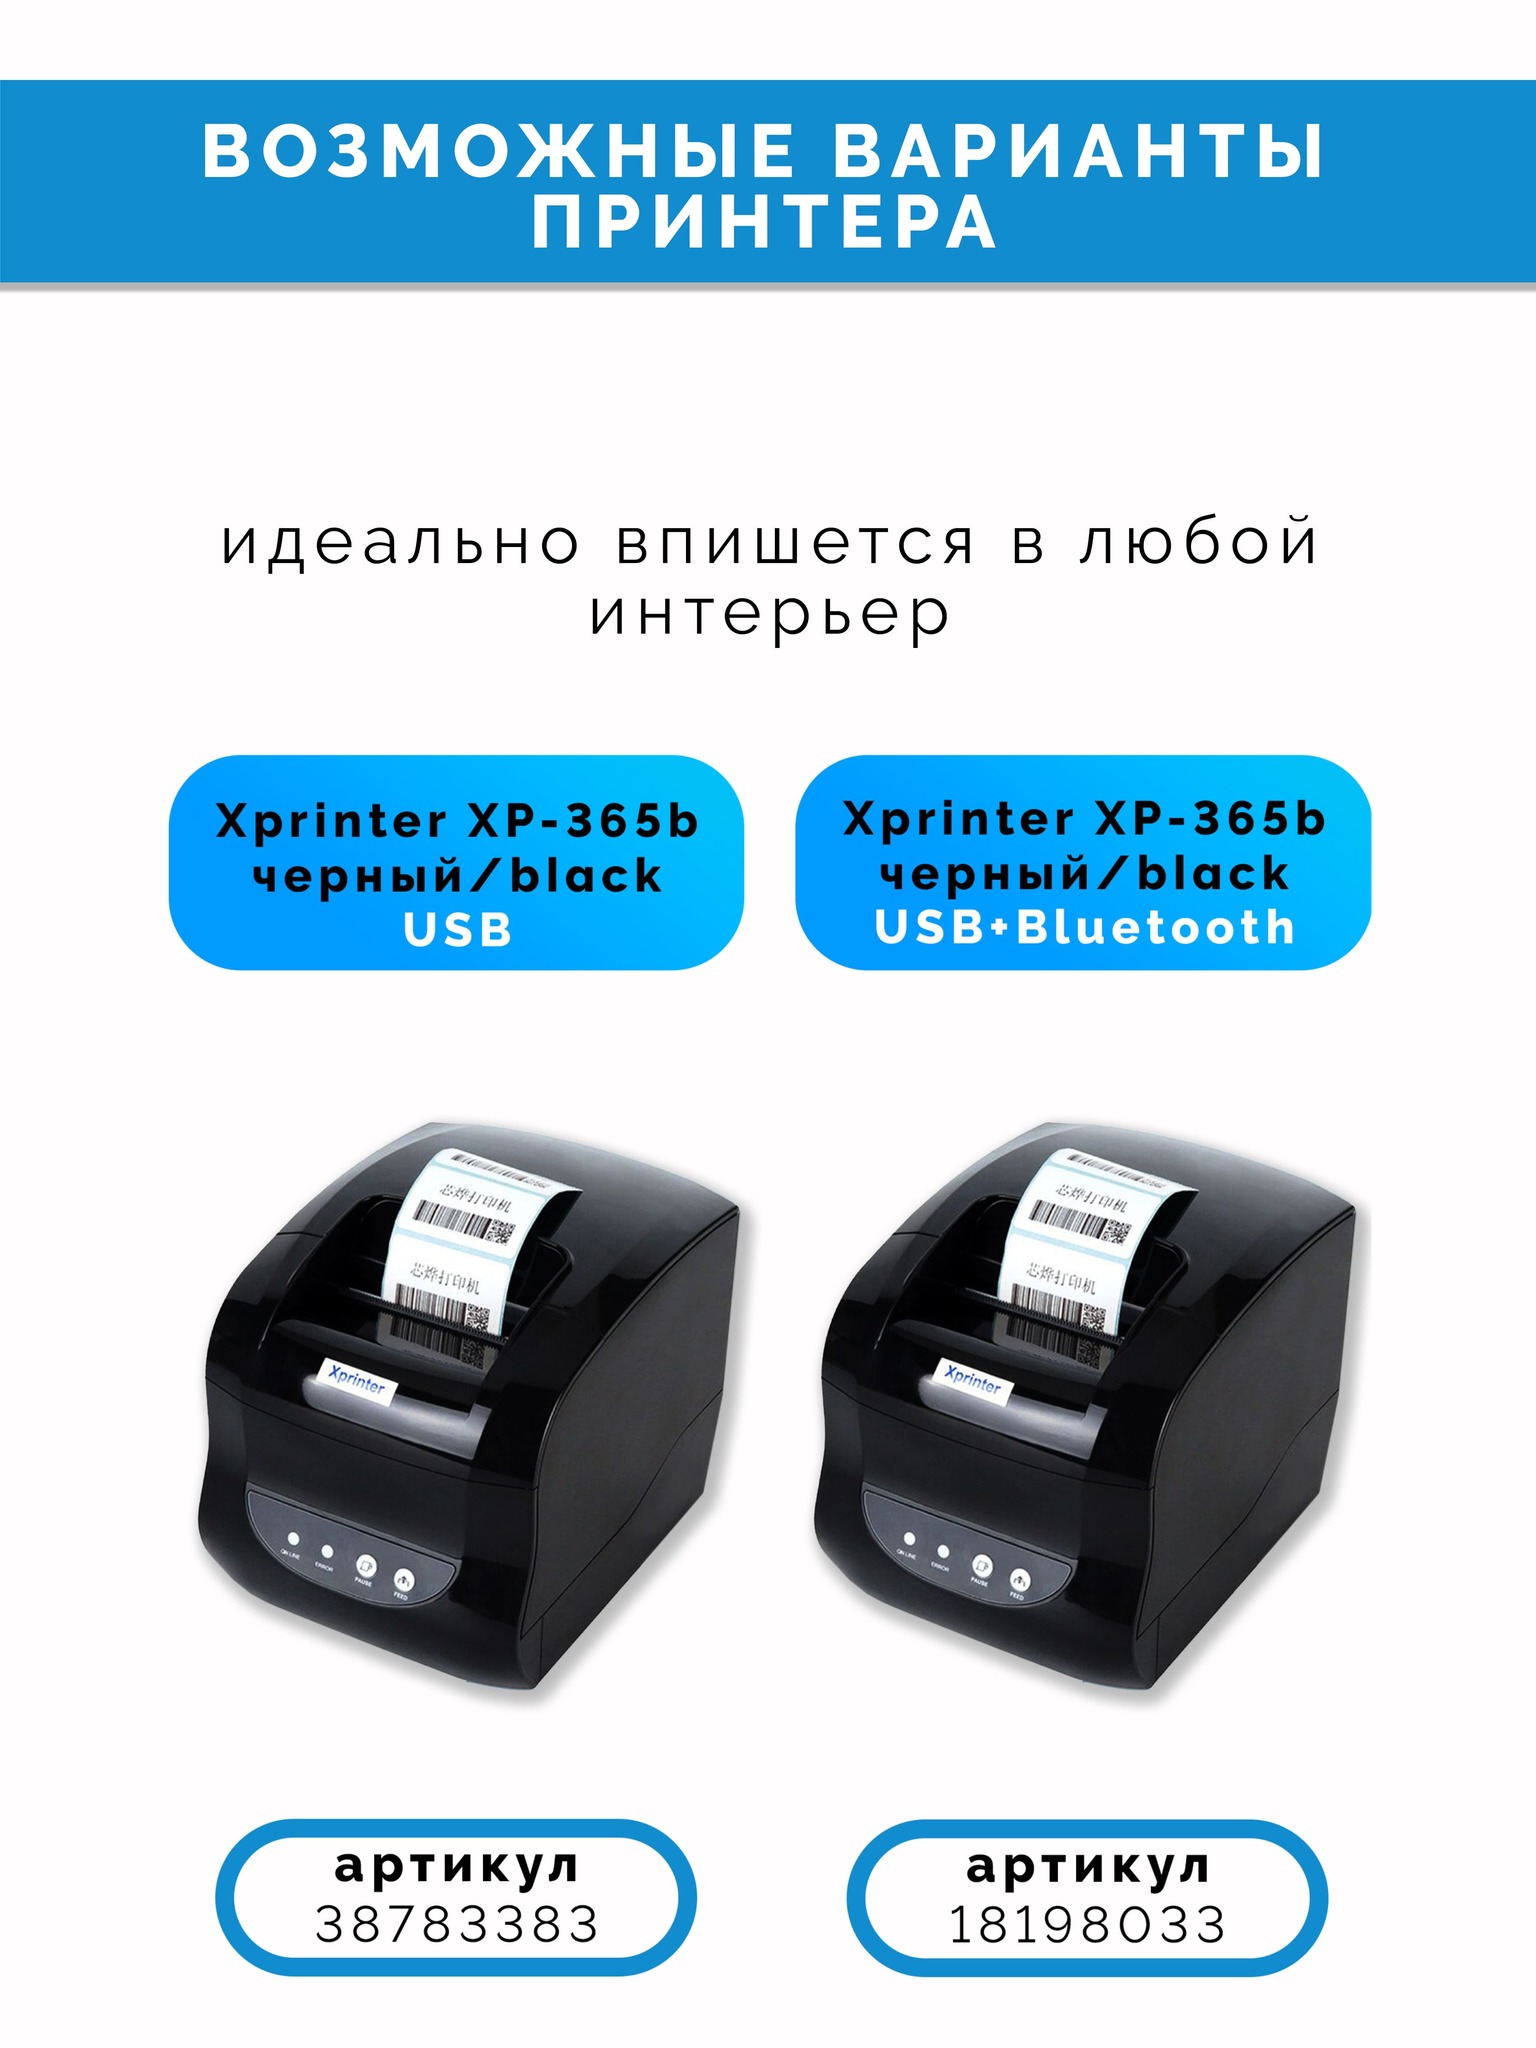 365b xprinter как печатать. Принтер этикеток Xprinter-365b. Термопринтер Xprinter XP-365b печать. Принтер этикеток Xprinter XP-365. Термальный принтер этикеток блок питания Xprinter XP-365b.